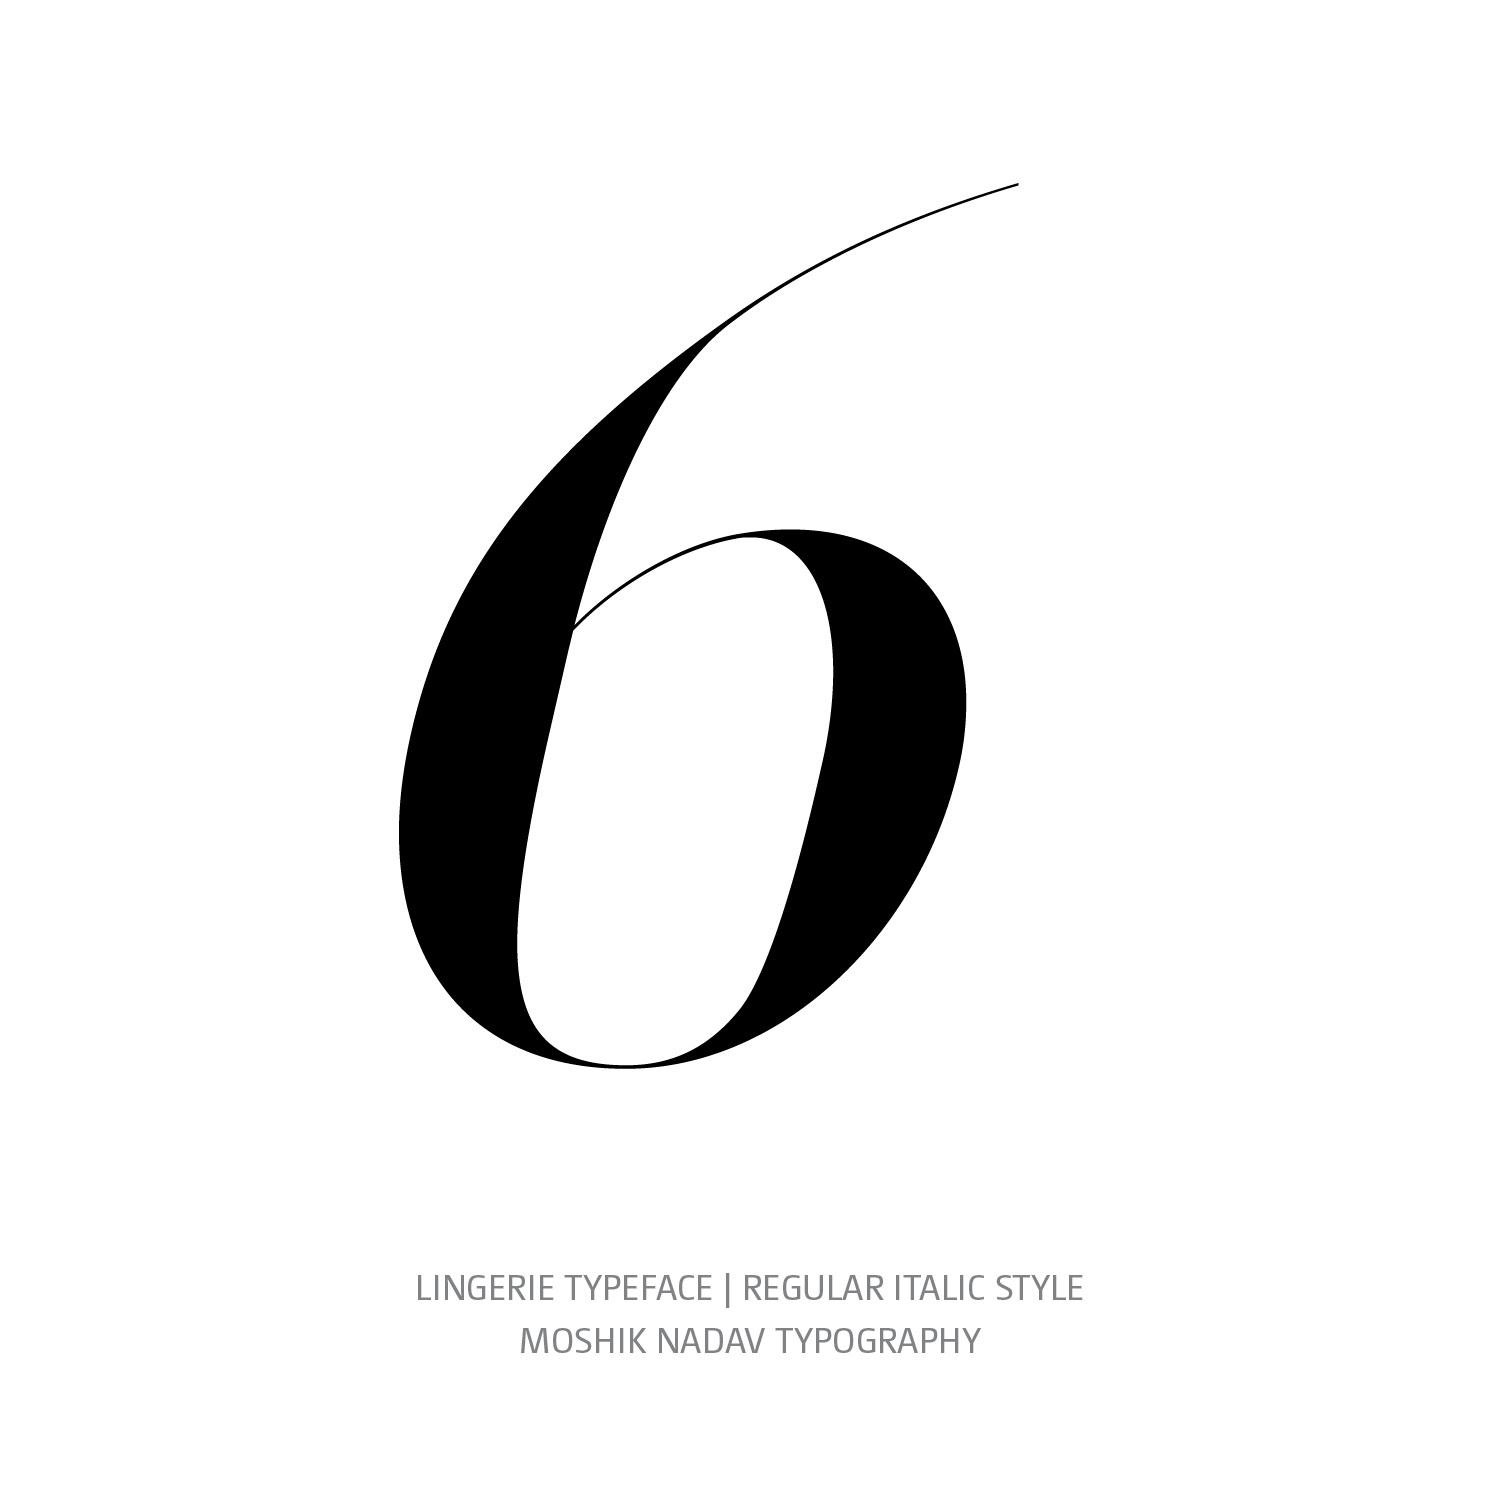 Lingerie Typeface Regular Italic 6 - Fashion fonts by Moshik Nadav Typography